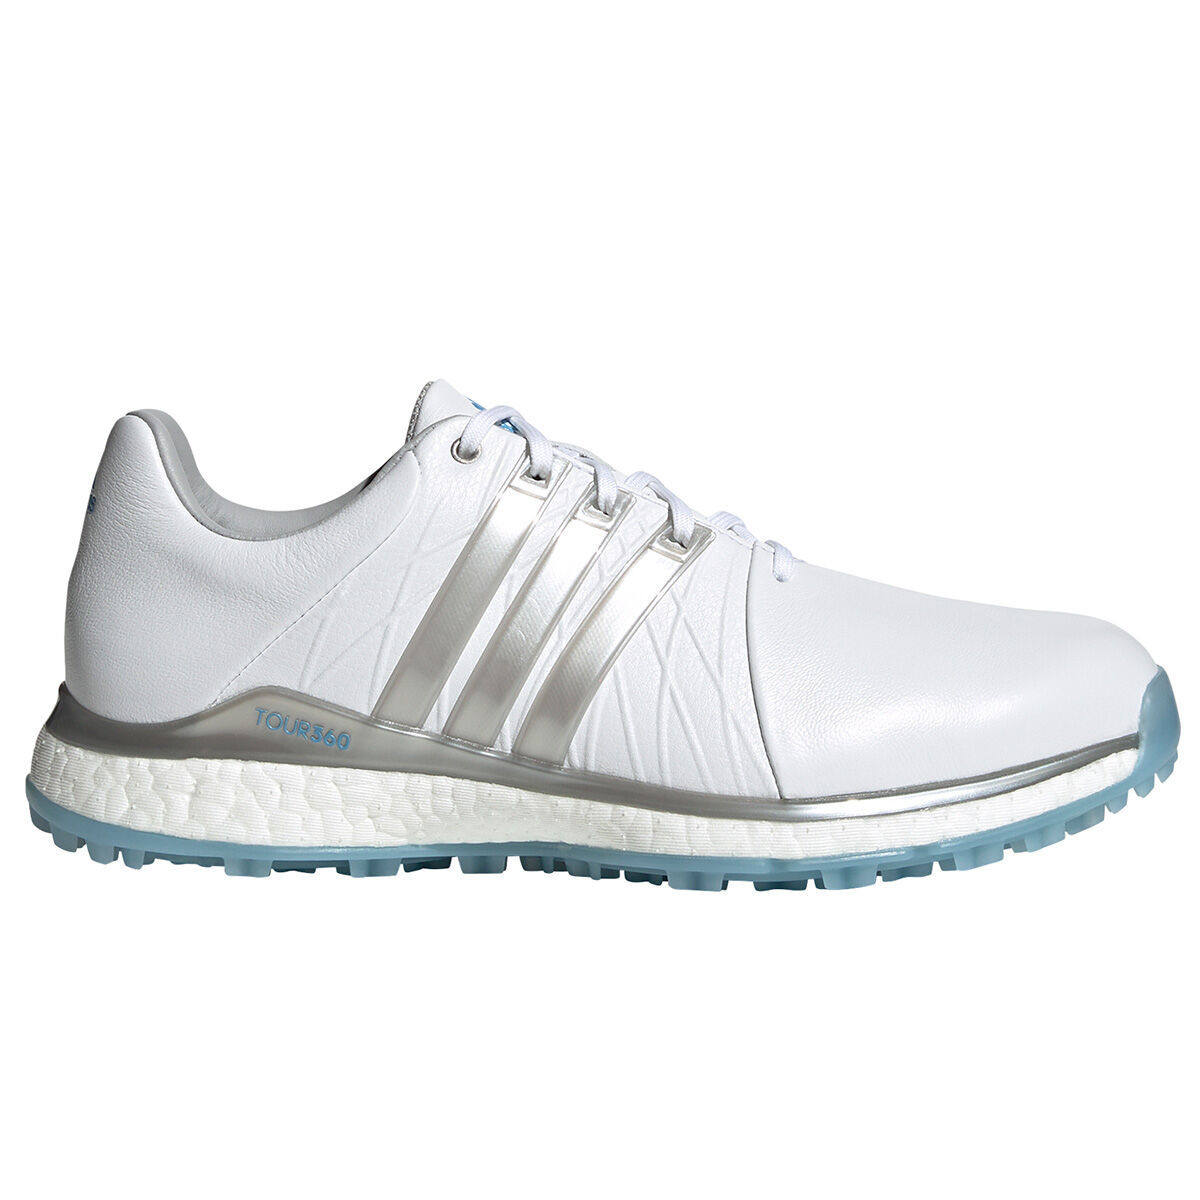 Chaussures adidas Golf Tour 360 XT-SL pour femmes, femme, 4, White/silver/light blue | Online Golf